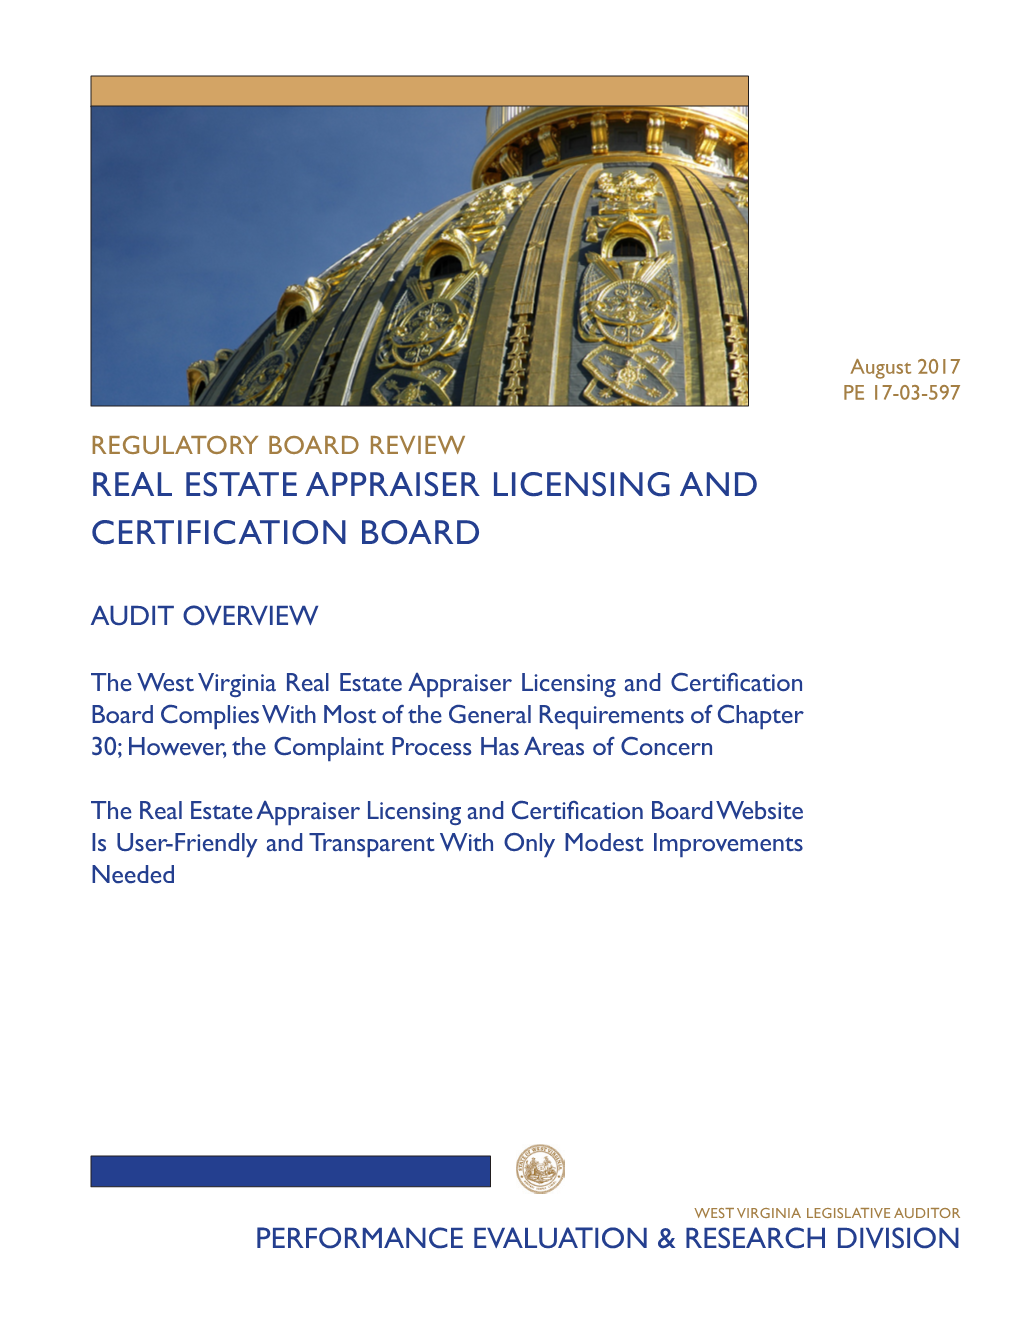 Real Estate Appraiser Licensing and Certification Board